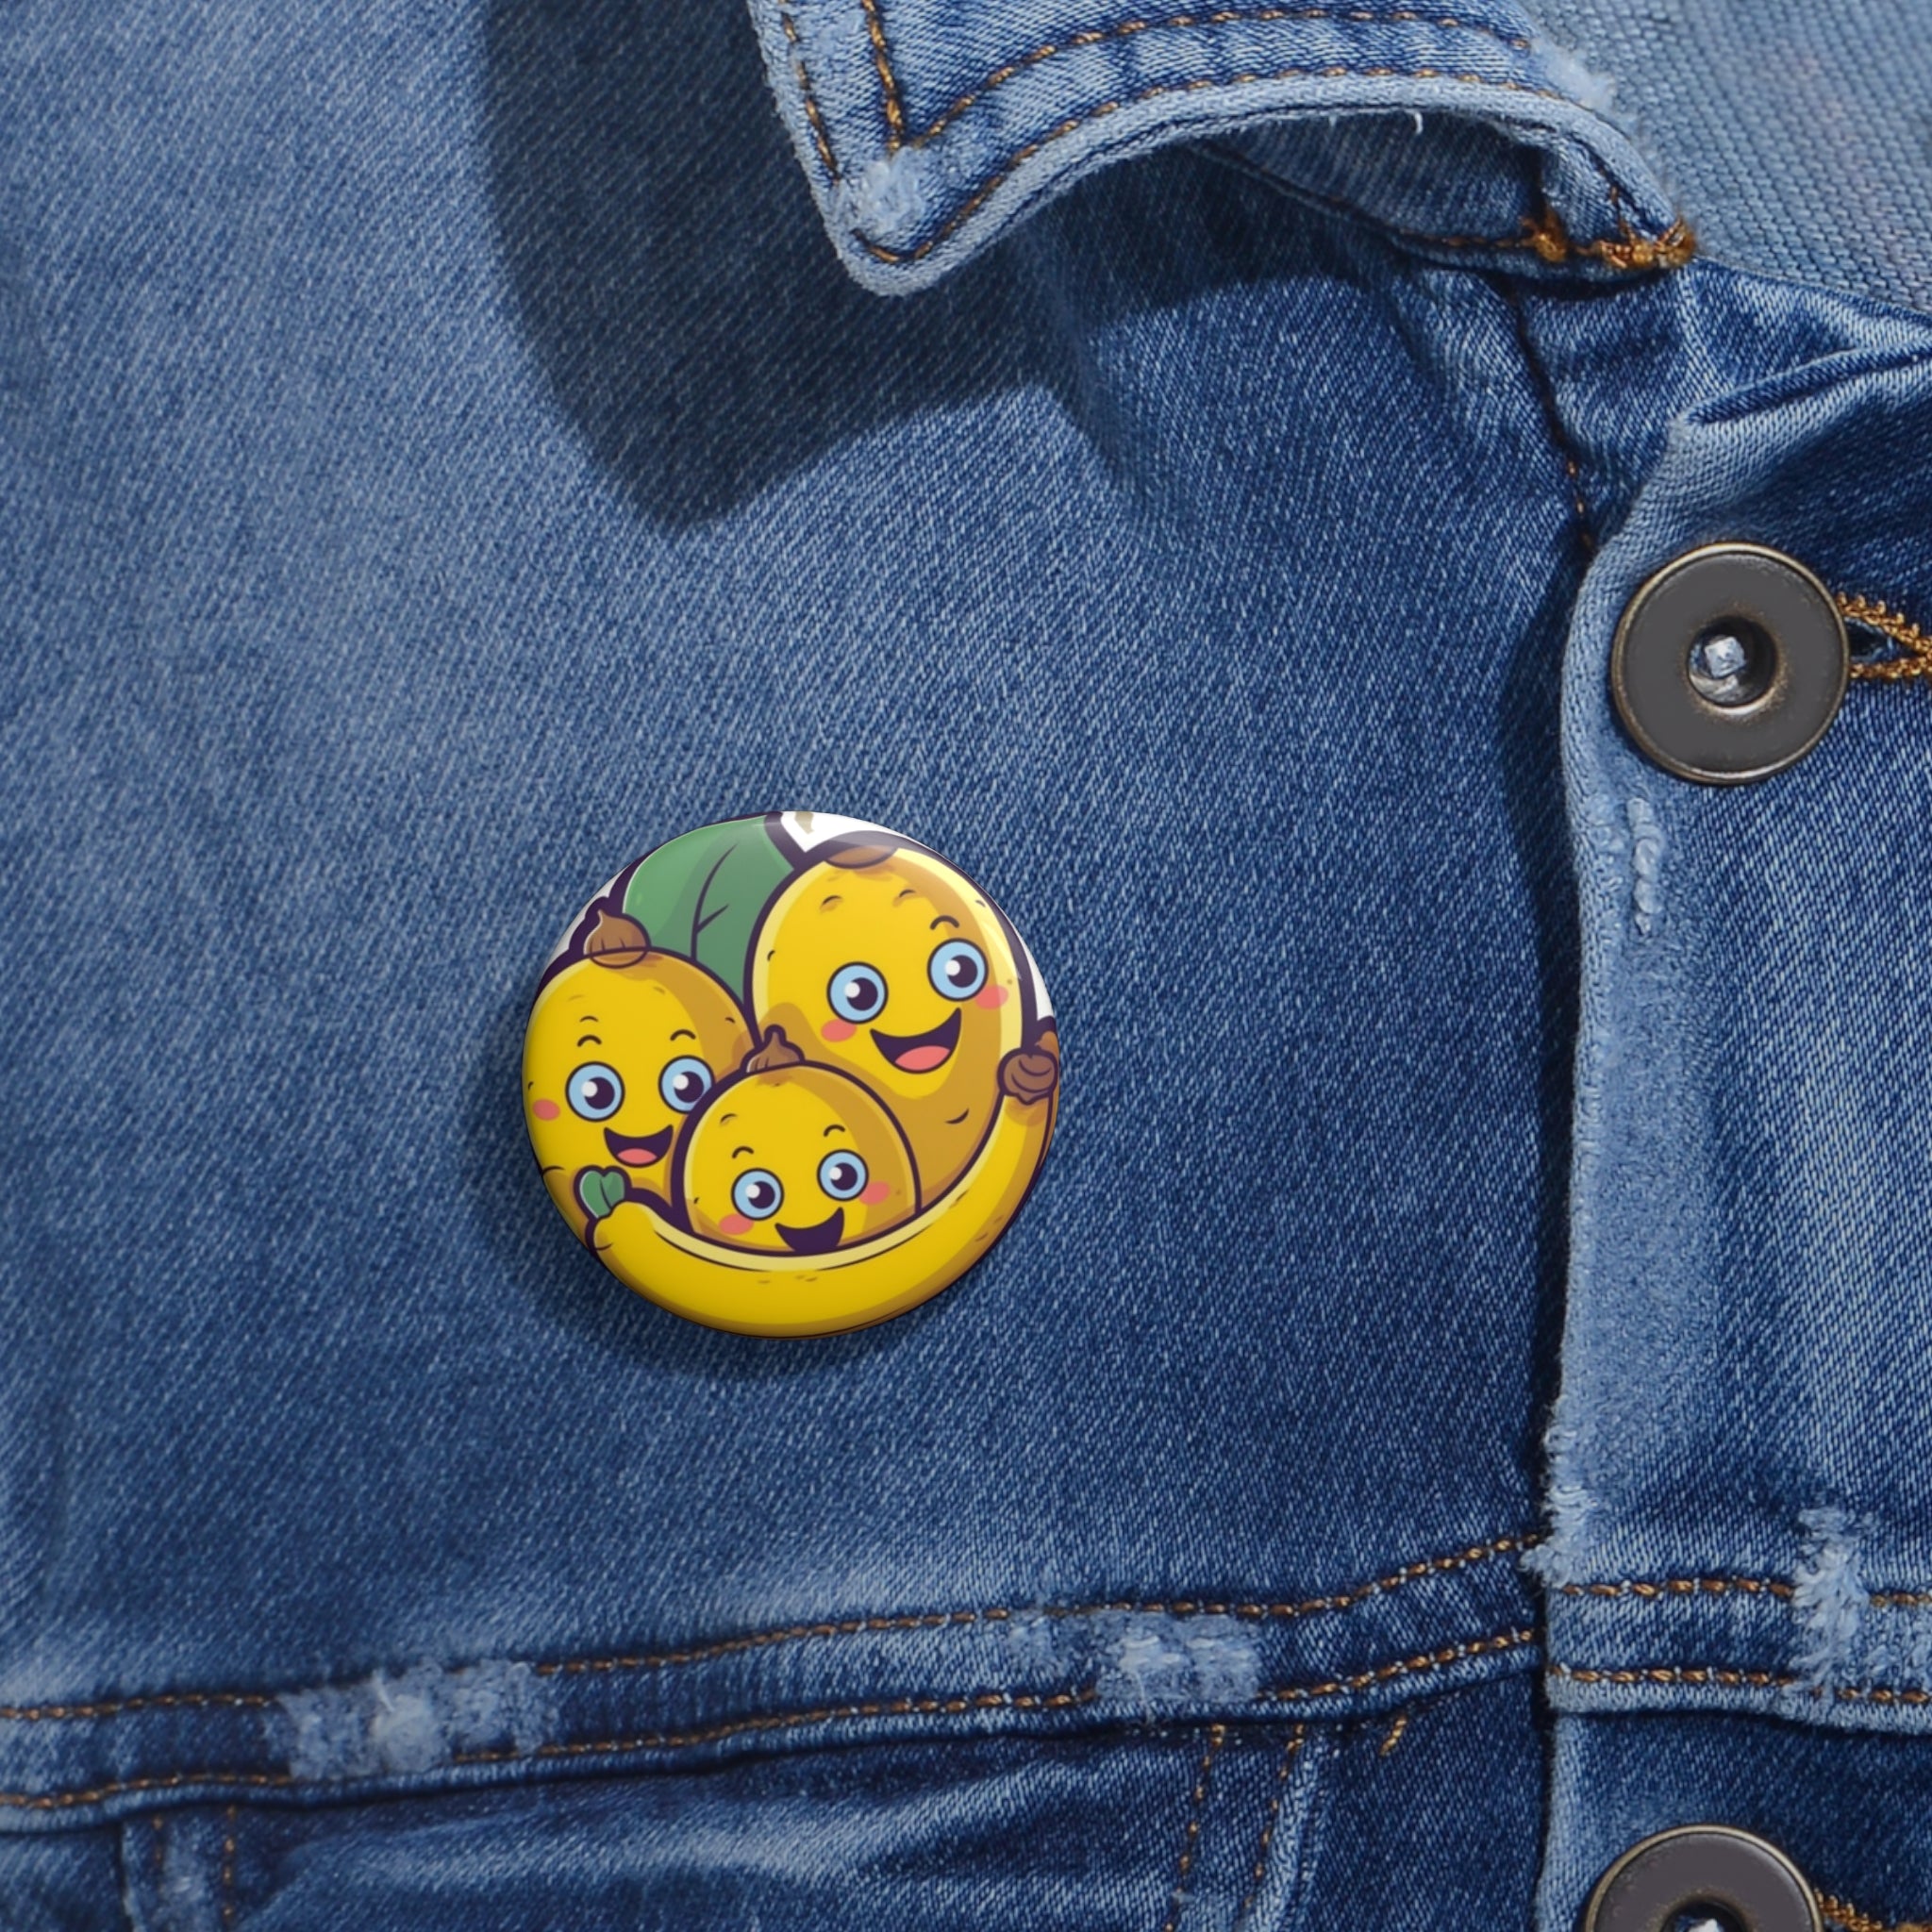 Custom Pin Buttons - Bananas